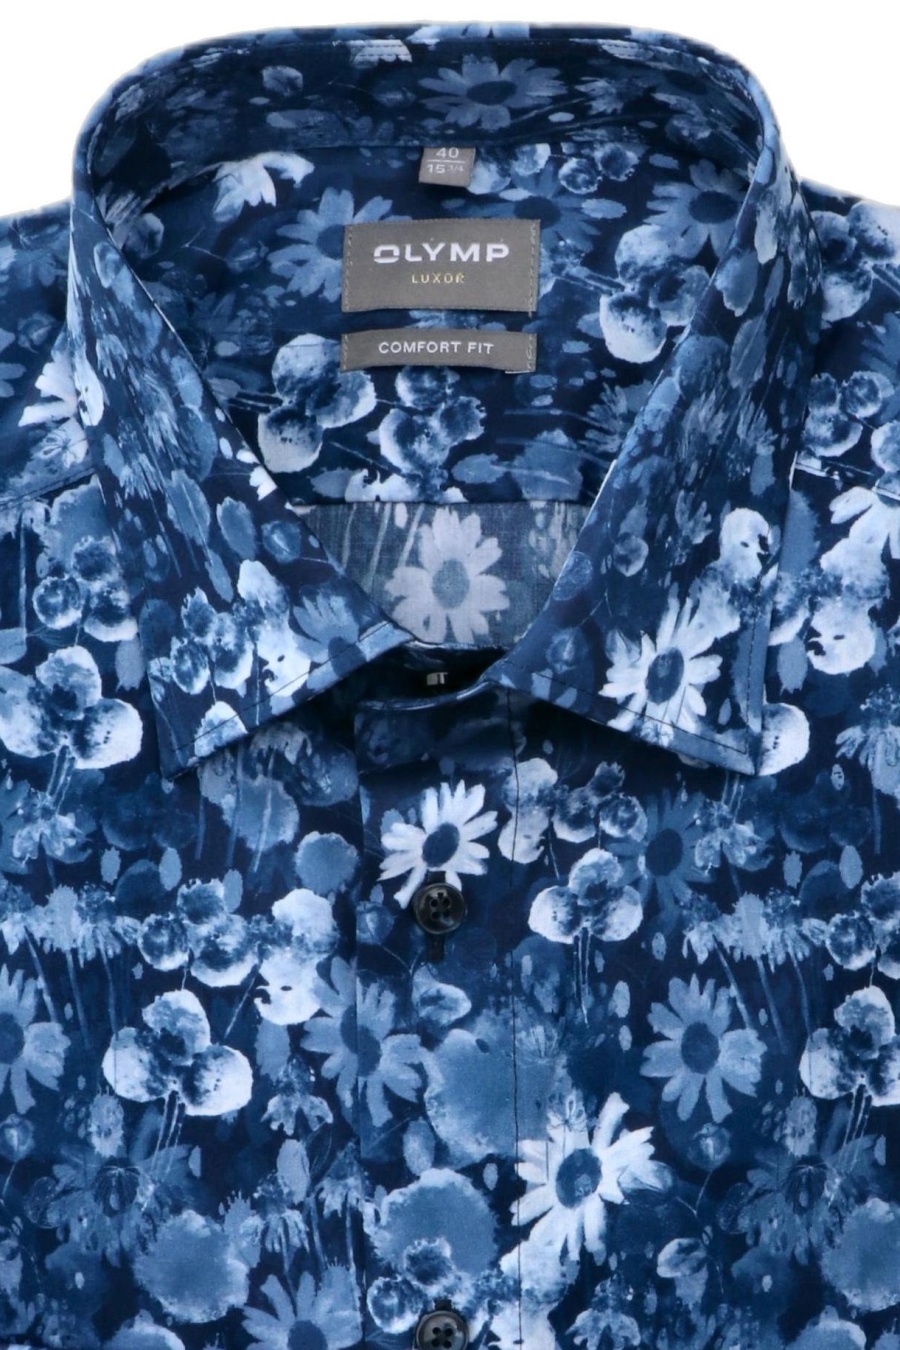 OLYMP Luxor comfort fit Hemd New blau Kragen Blumenmuster Langarm Kent